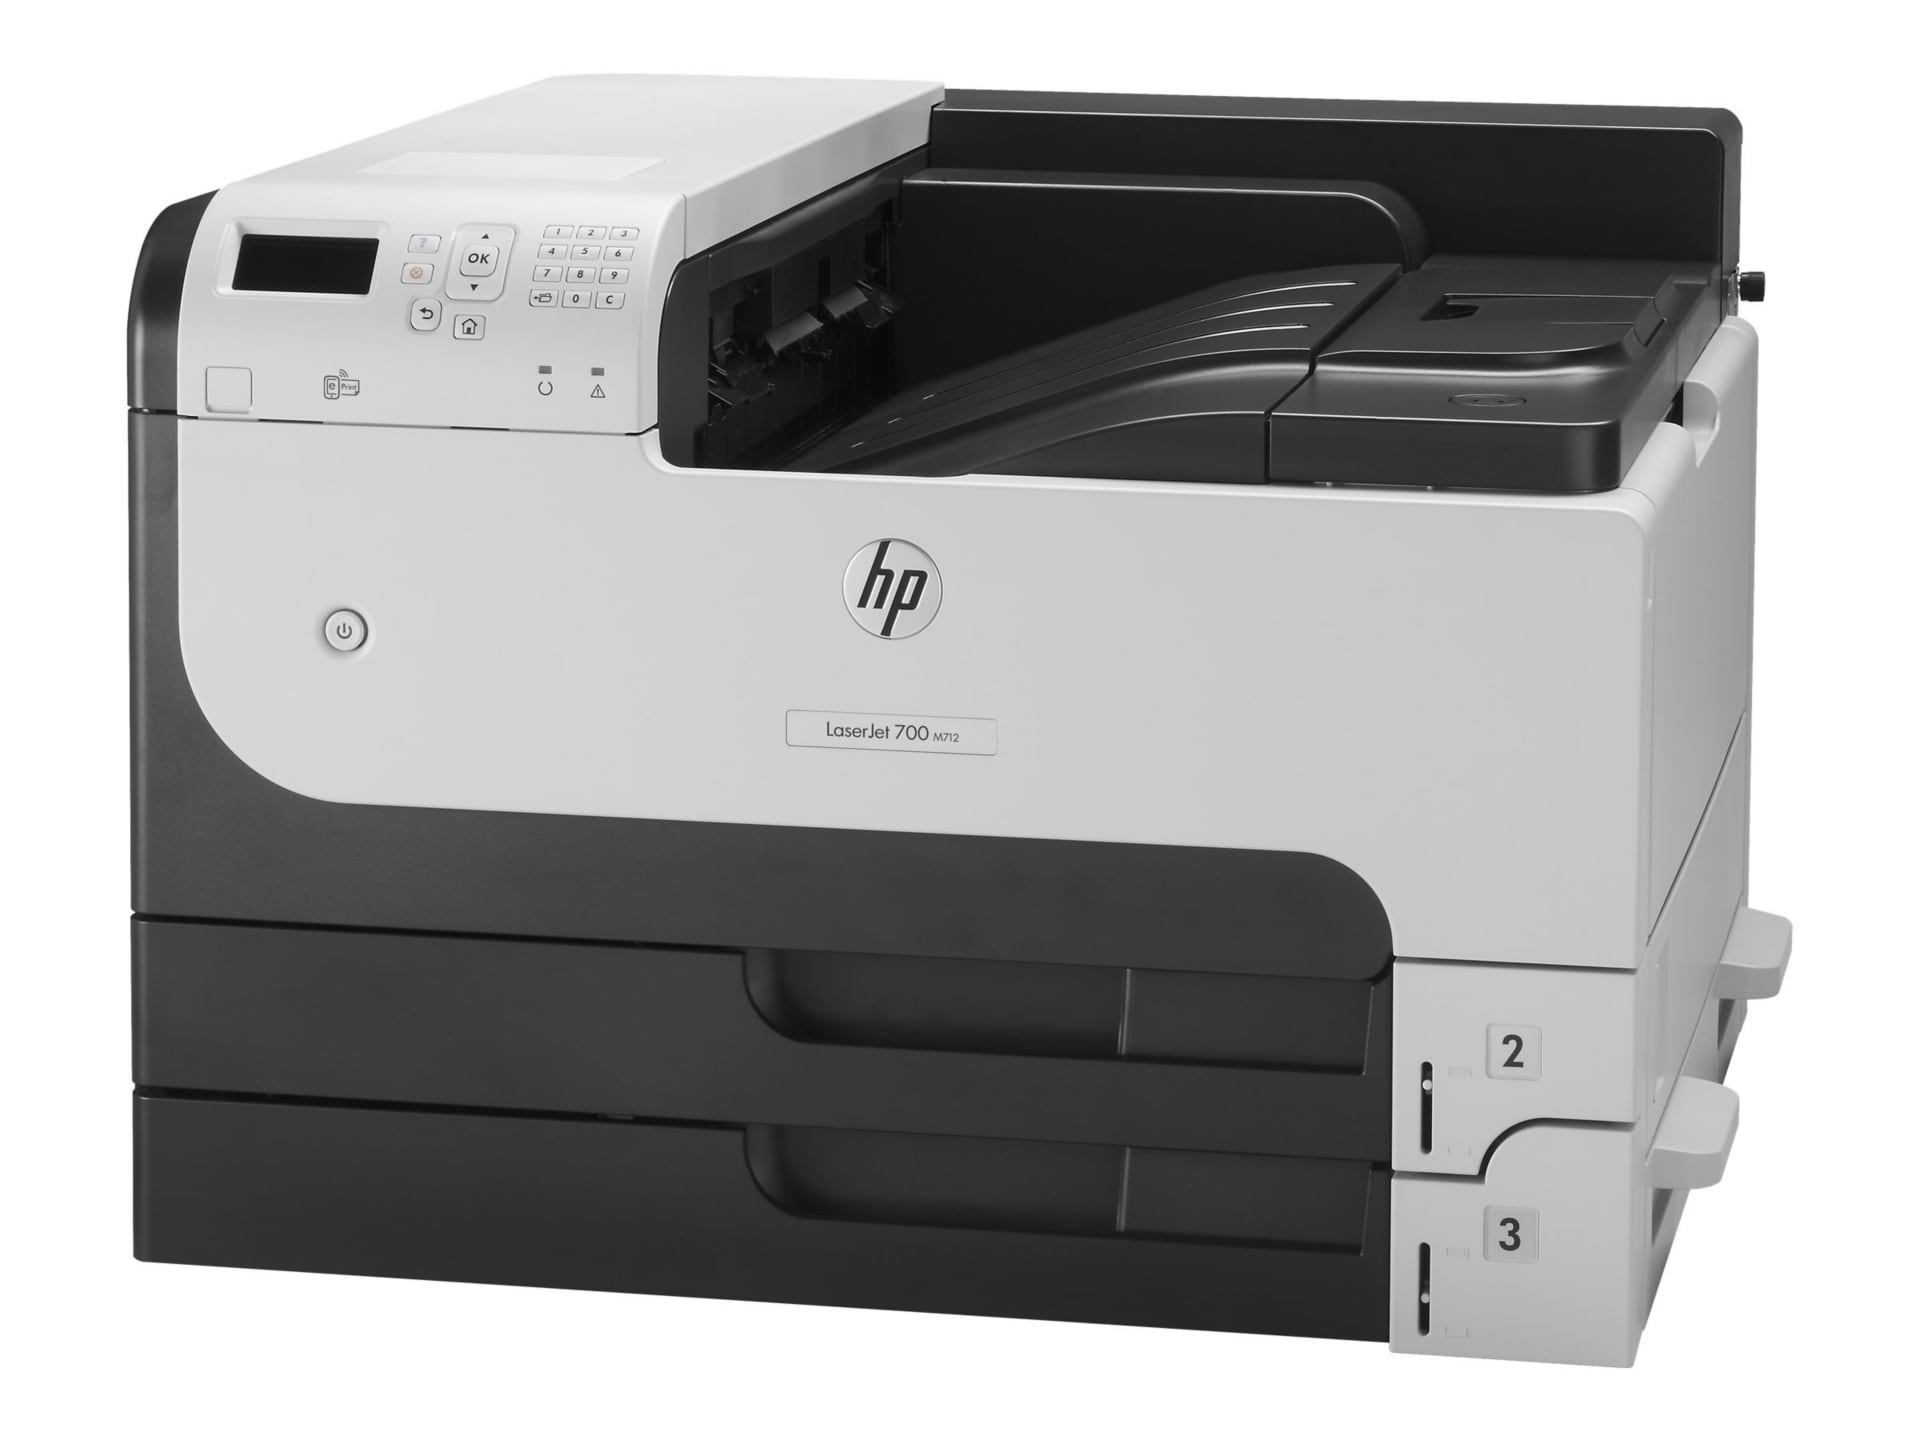 HP LaserJet Enterprise M712n 40 ppm Laser Printer